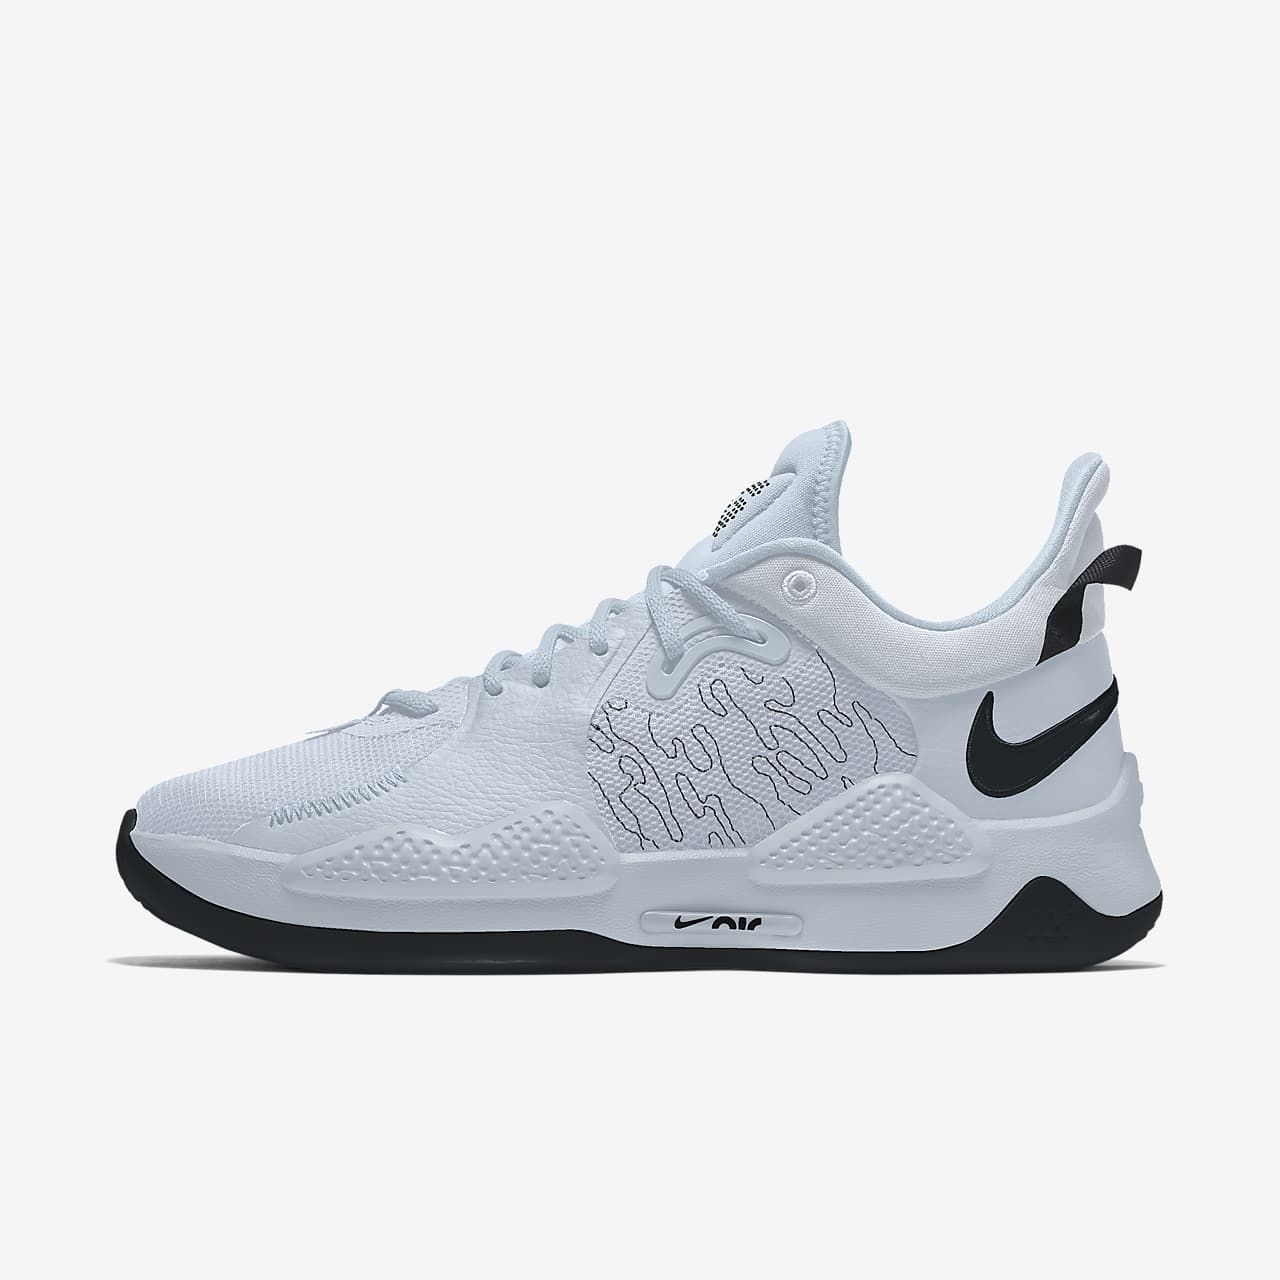 PG 5 By You Custom Basketball Shoe. Nike NZ